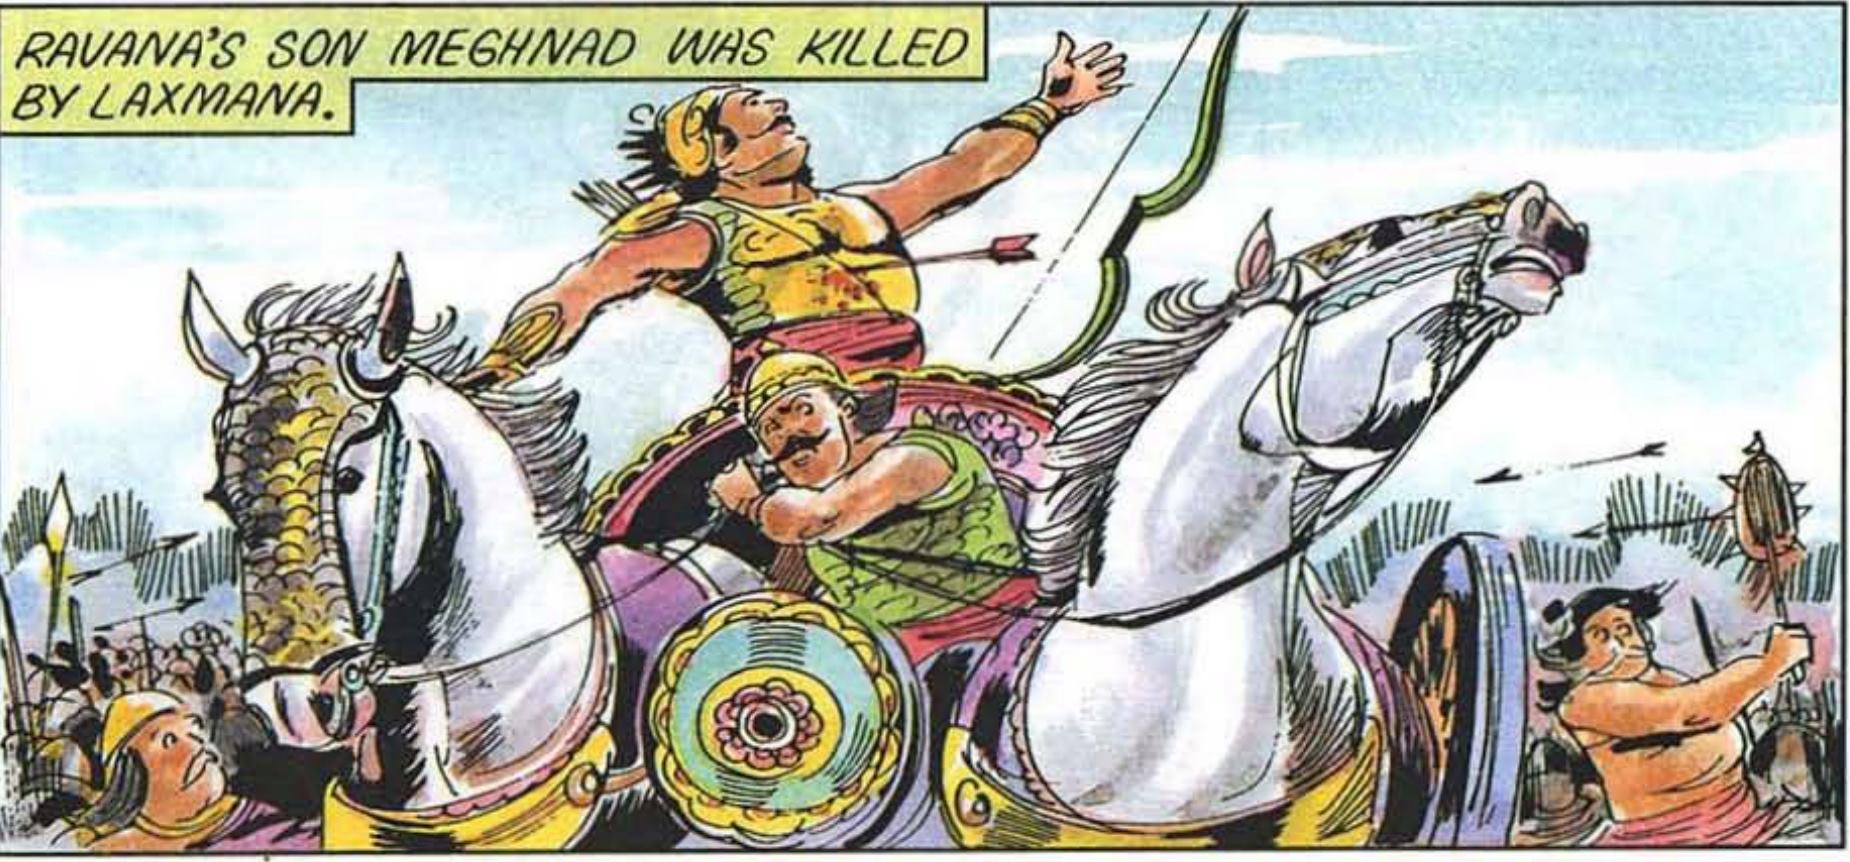 Reference of Lakshmana killing Meghnad- Courtesy Amar Chitra Katha